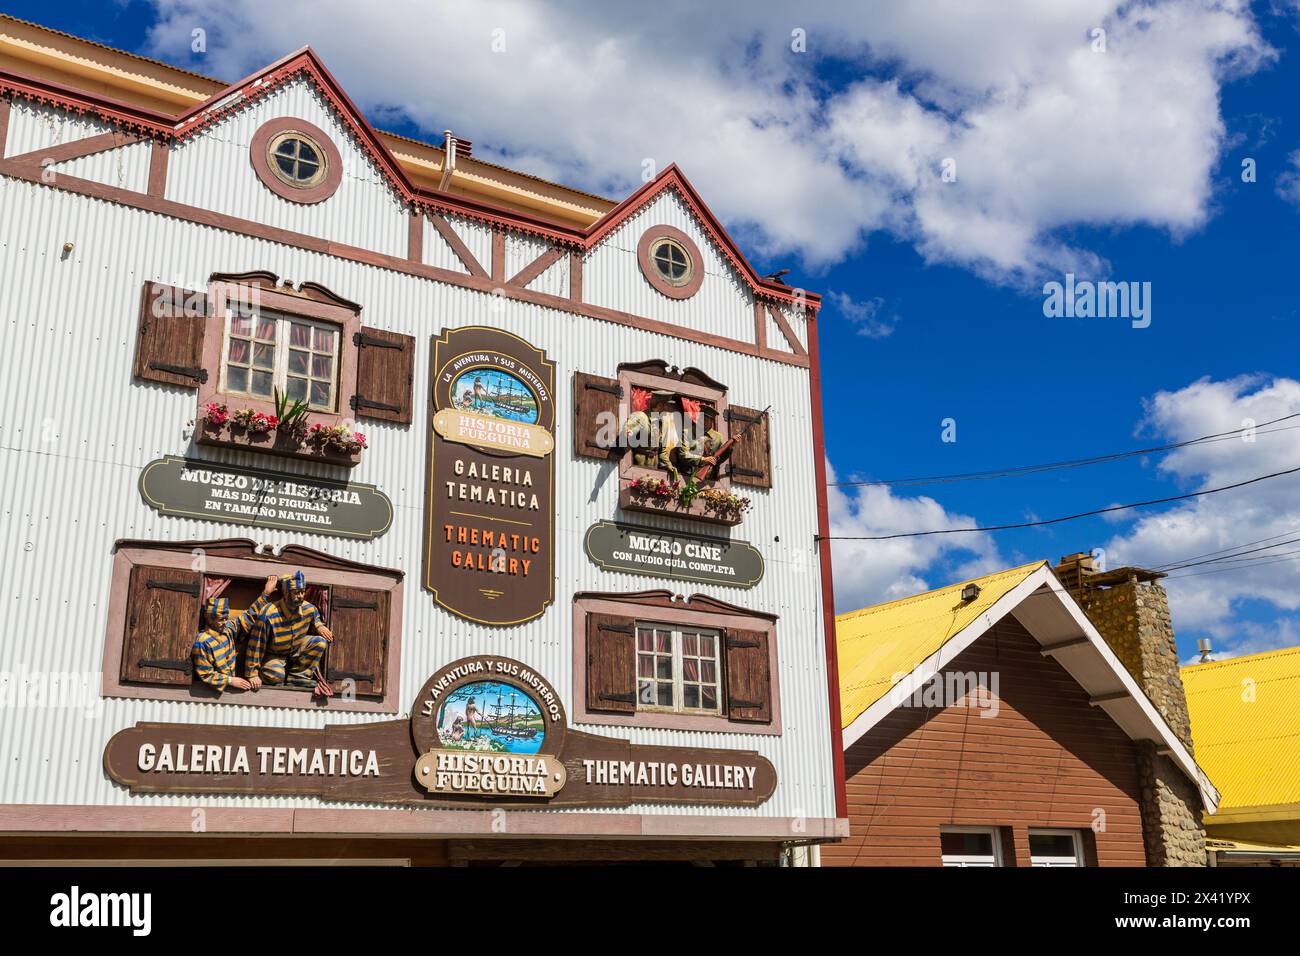 Thematic Gallery, Ushuaia, Tierra del Fuego, Argentina, South America Stock Photo